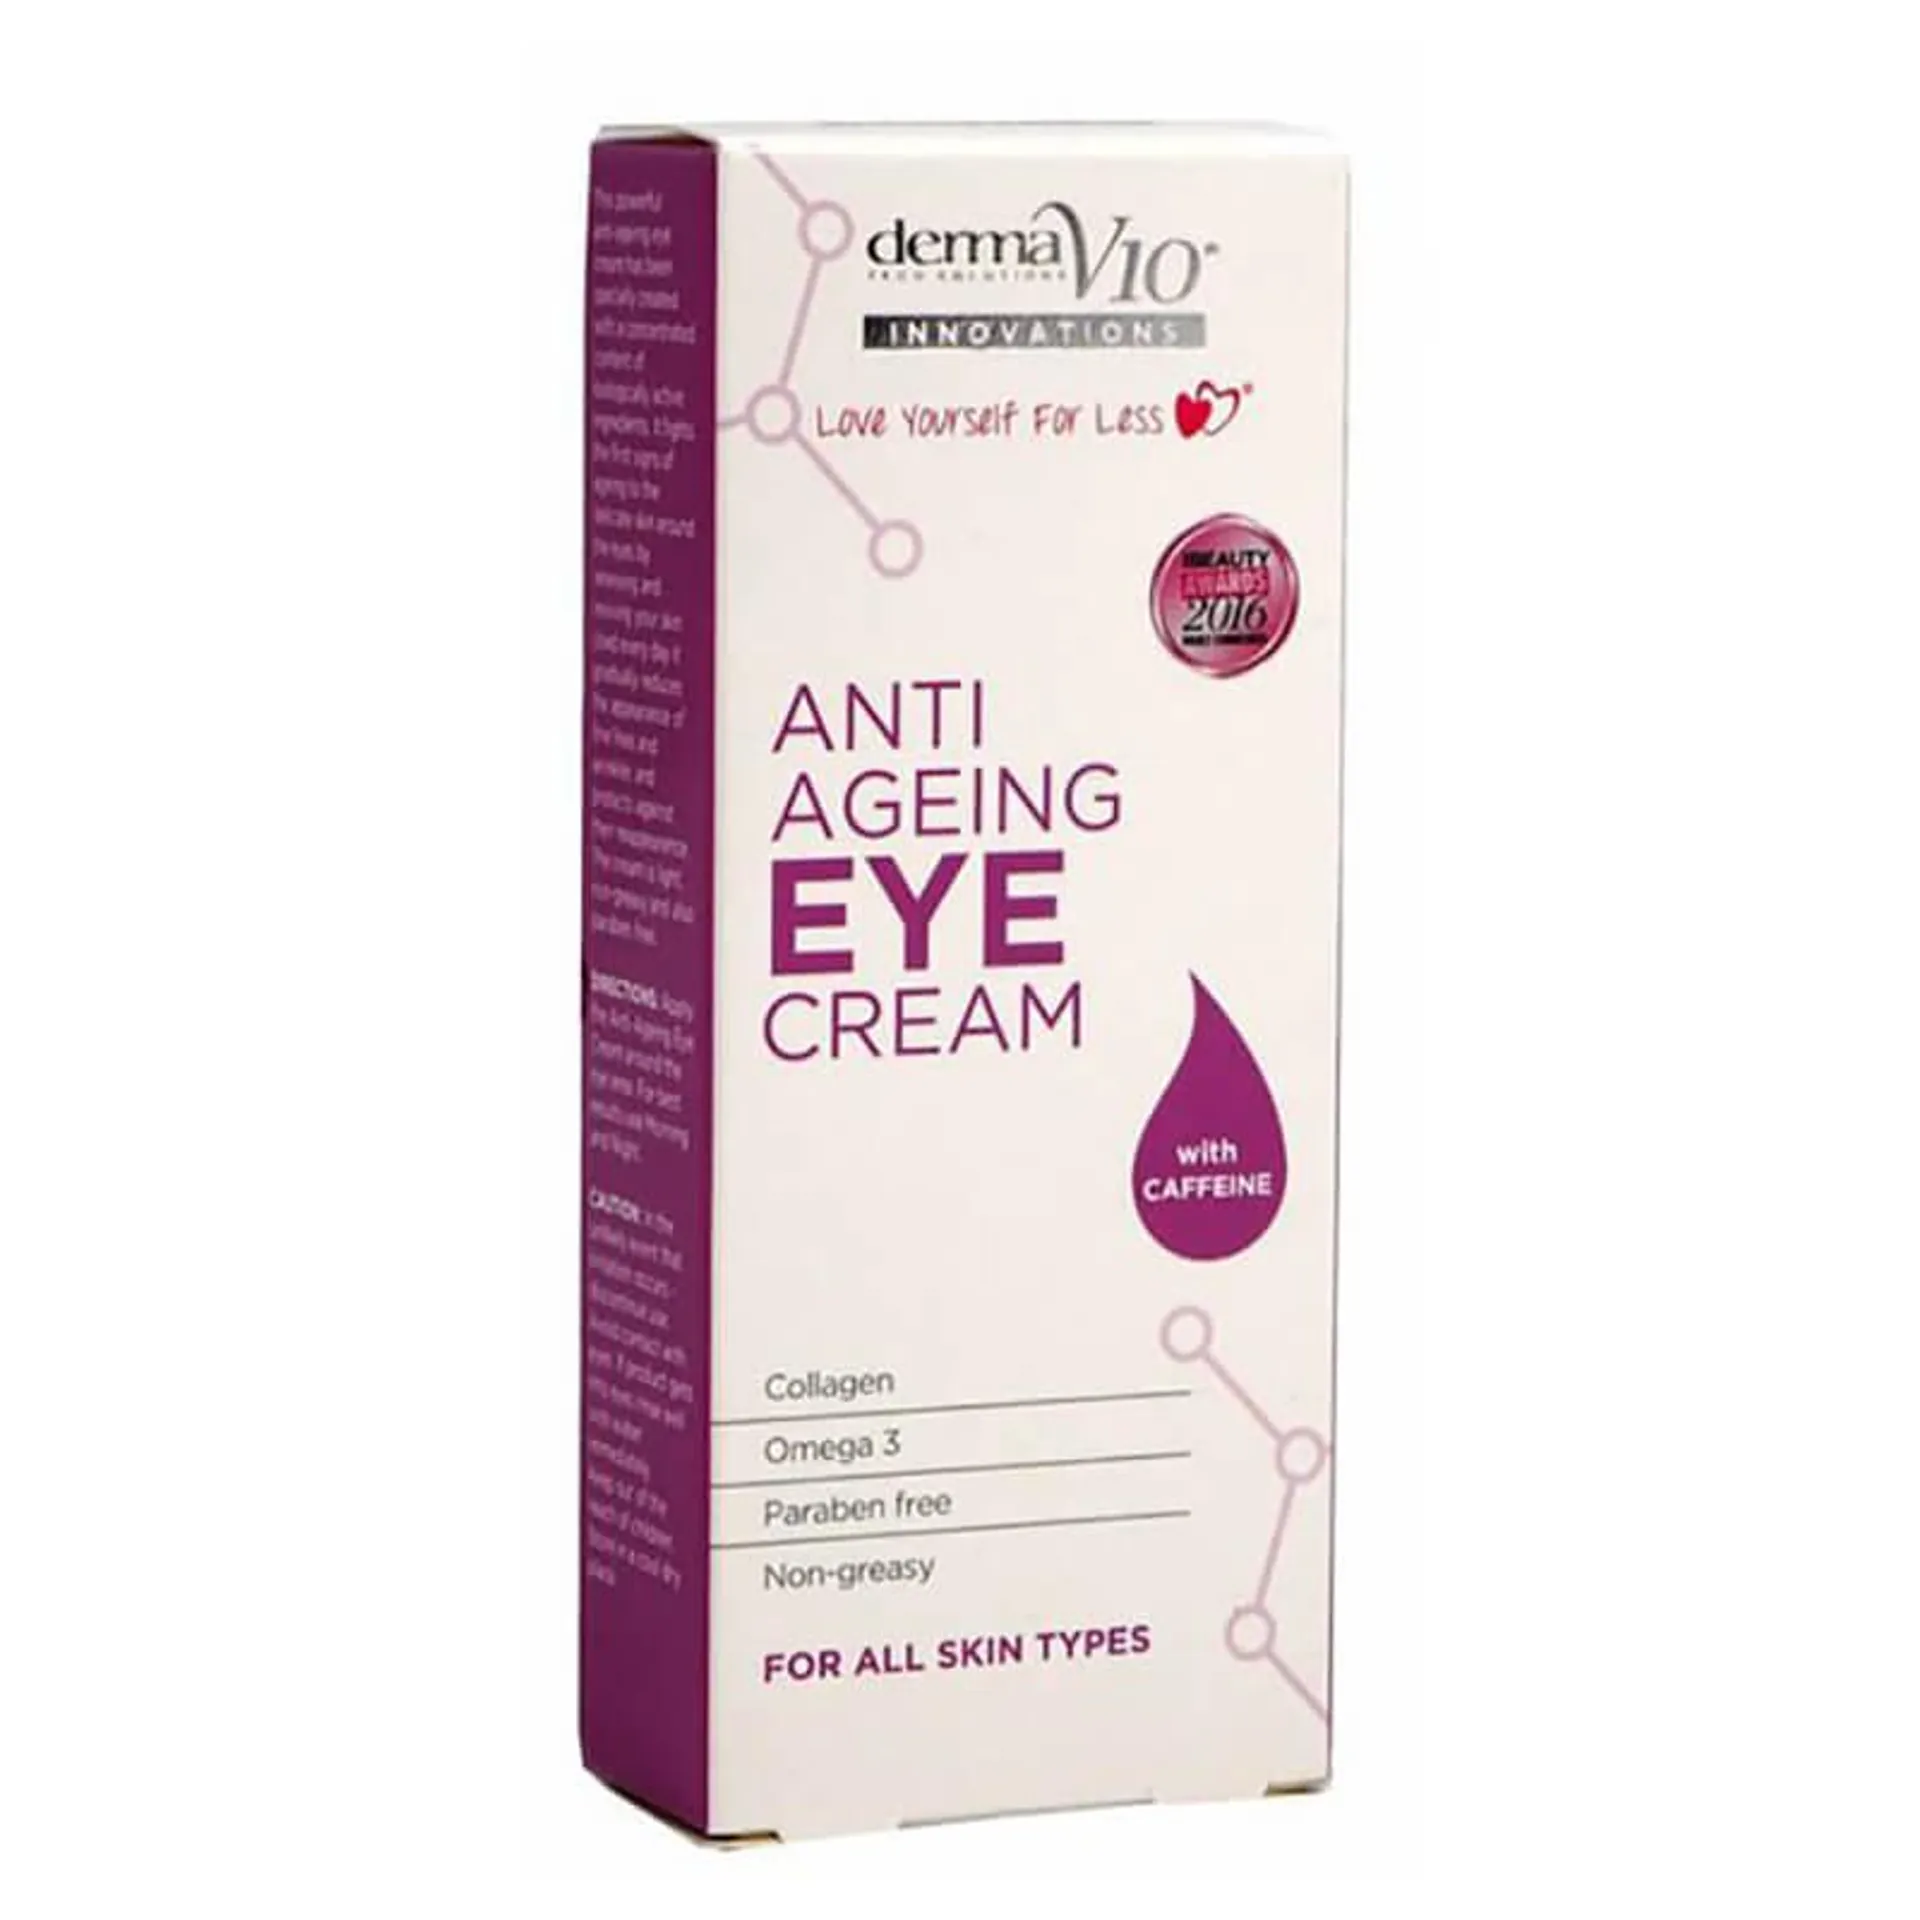 Derma V10 Anti-Ageing Eye Cream 15ml